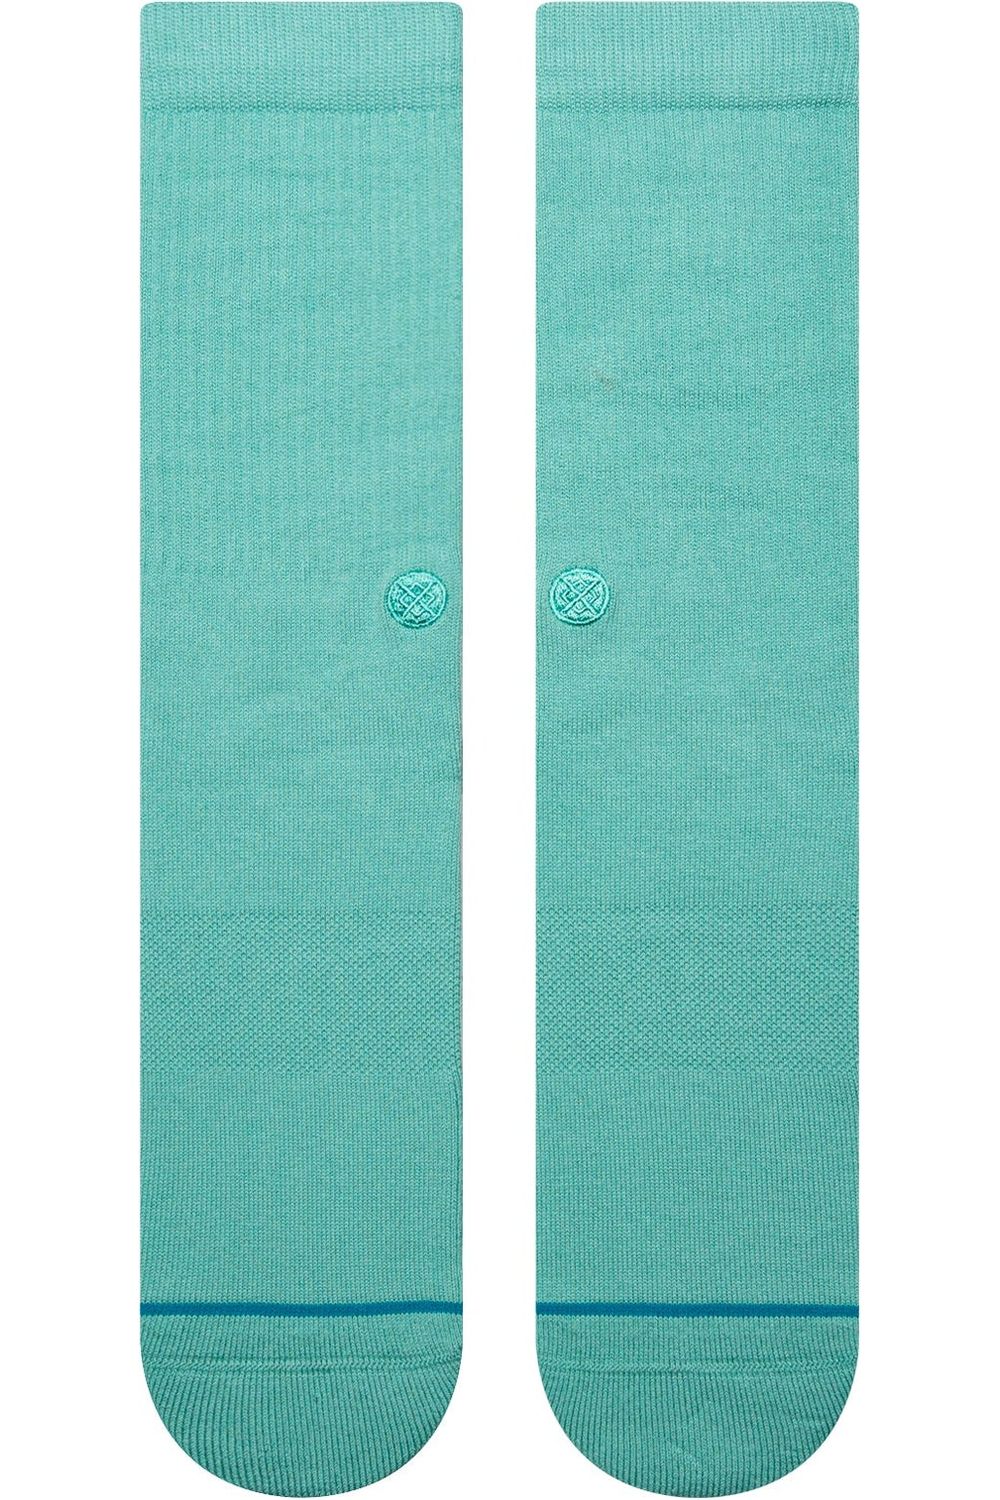 Stance Icon Socks Turquoise